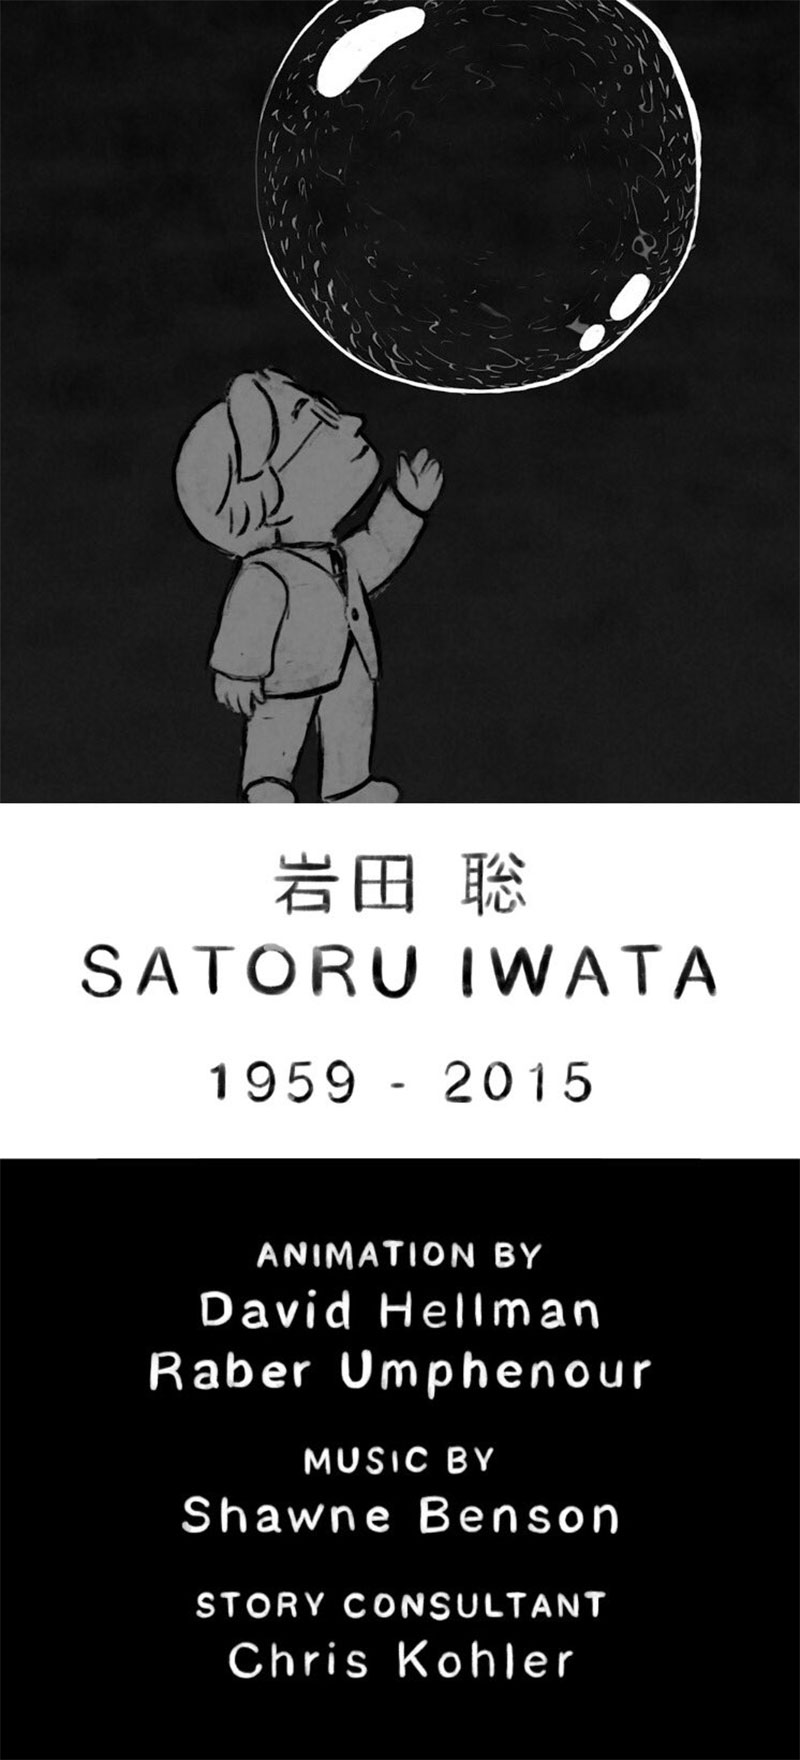 A Beautiful, Animated Tribute To Satoru Iwata